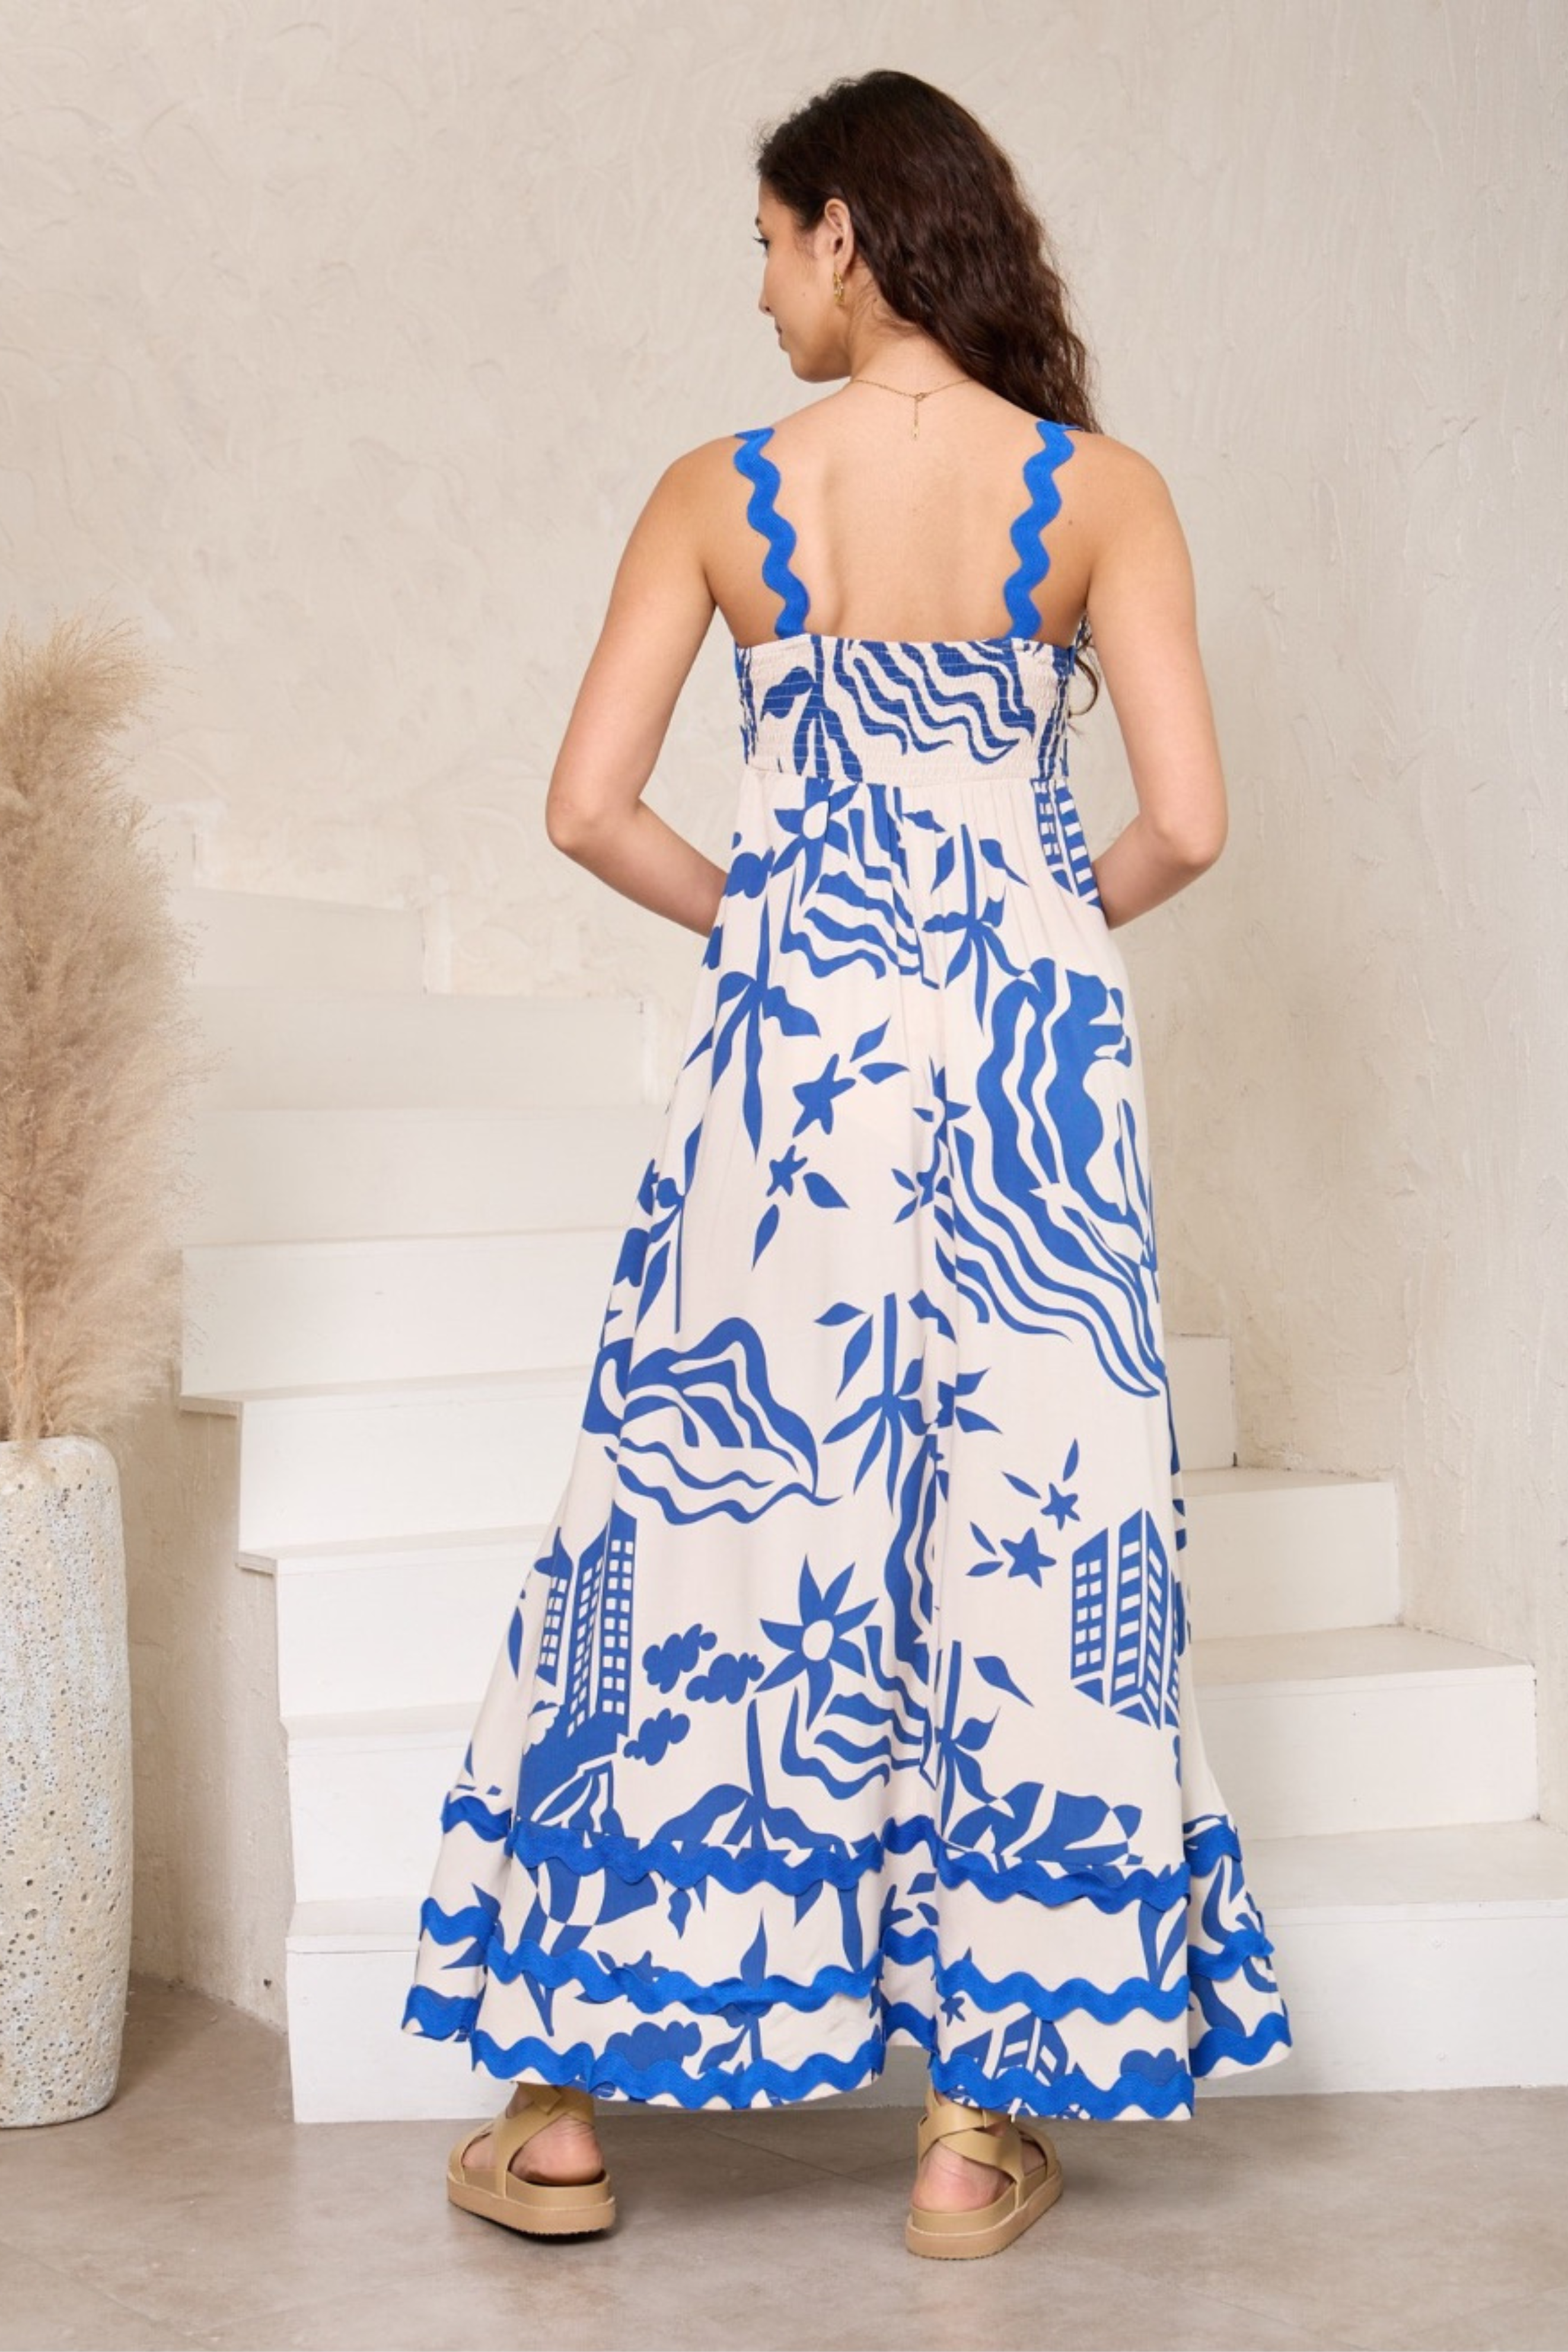 KORA Maxi Dress in Blue and Cream